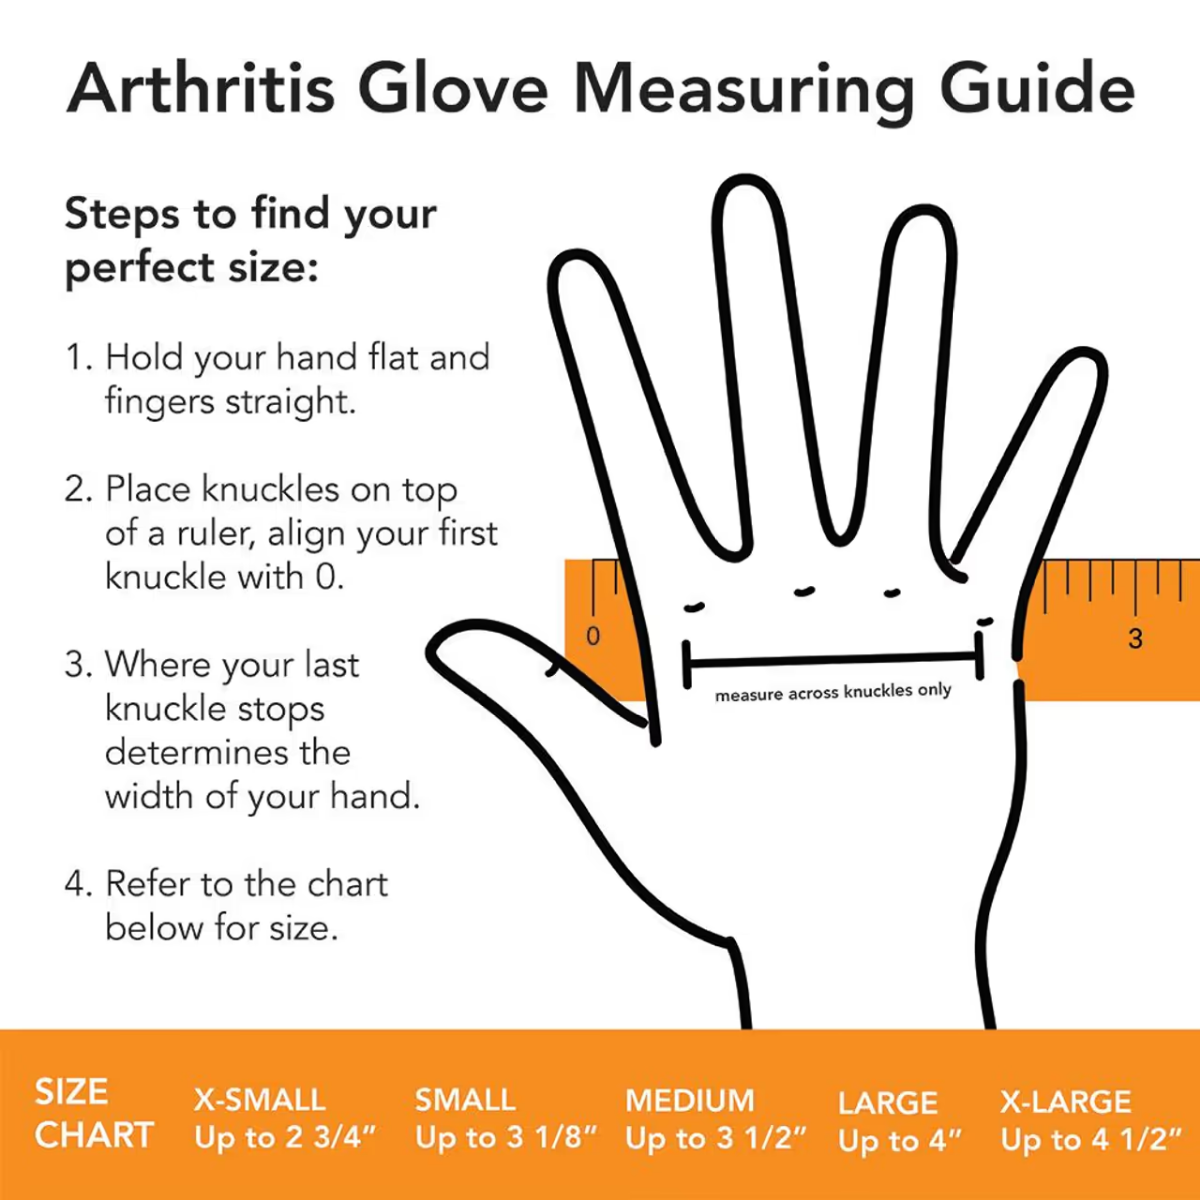 IMAK® arthritis gloves